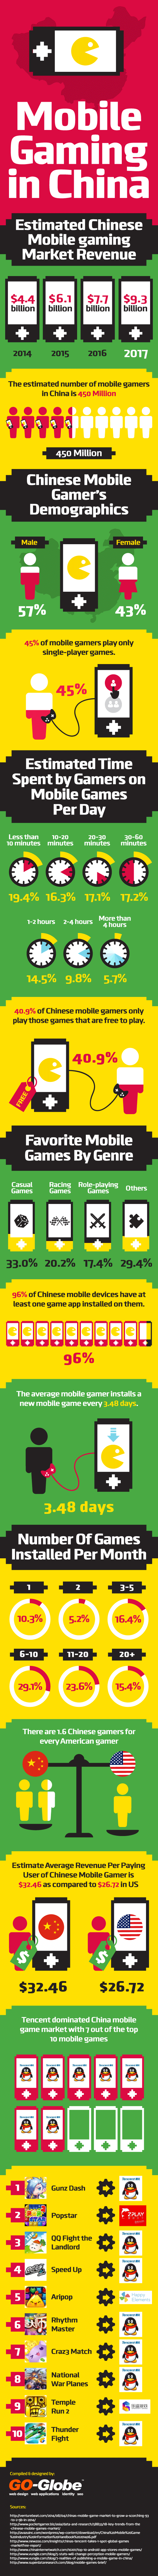 Mobile Gaming Figures China